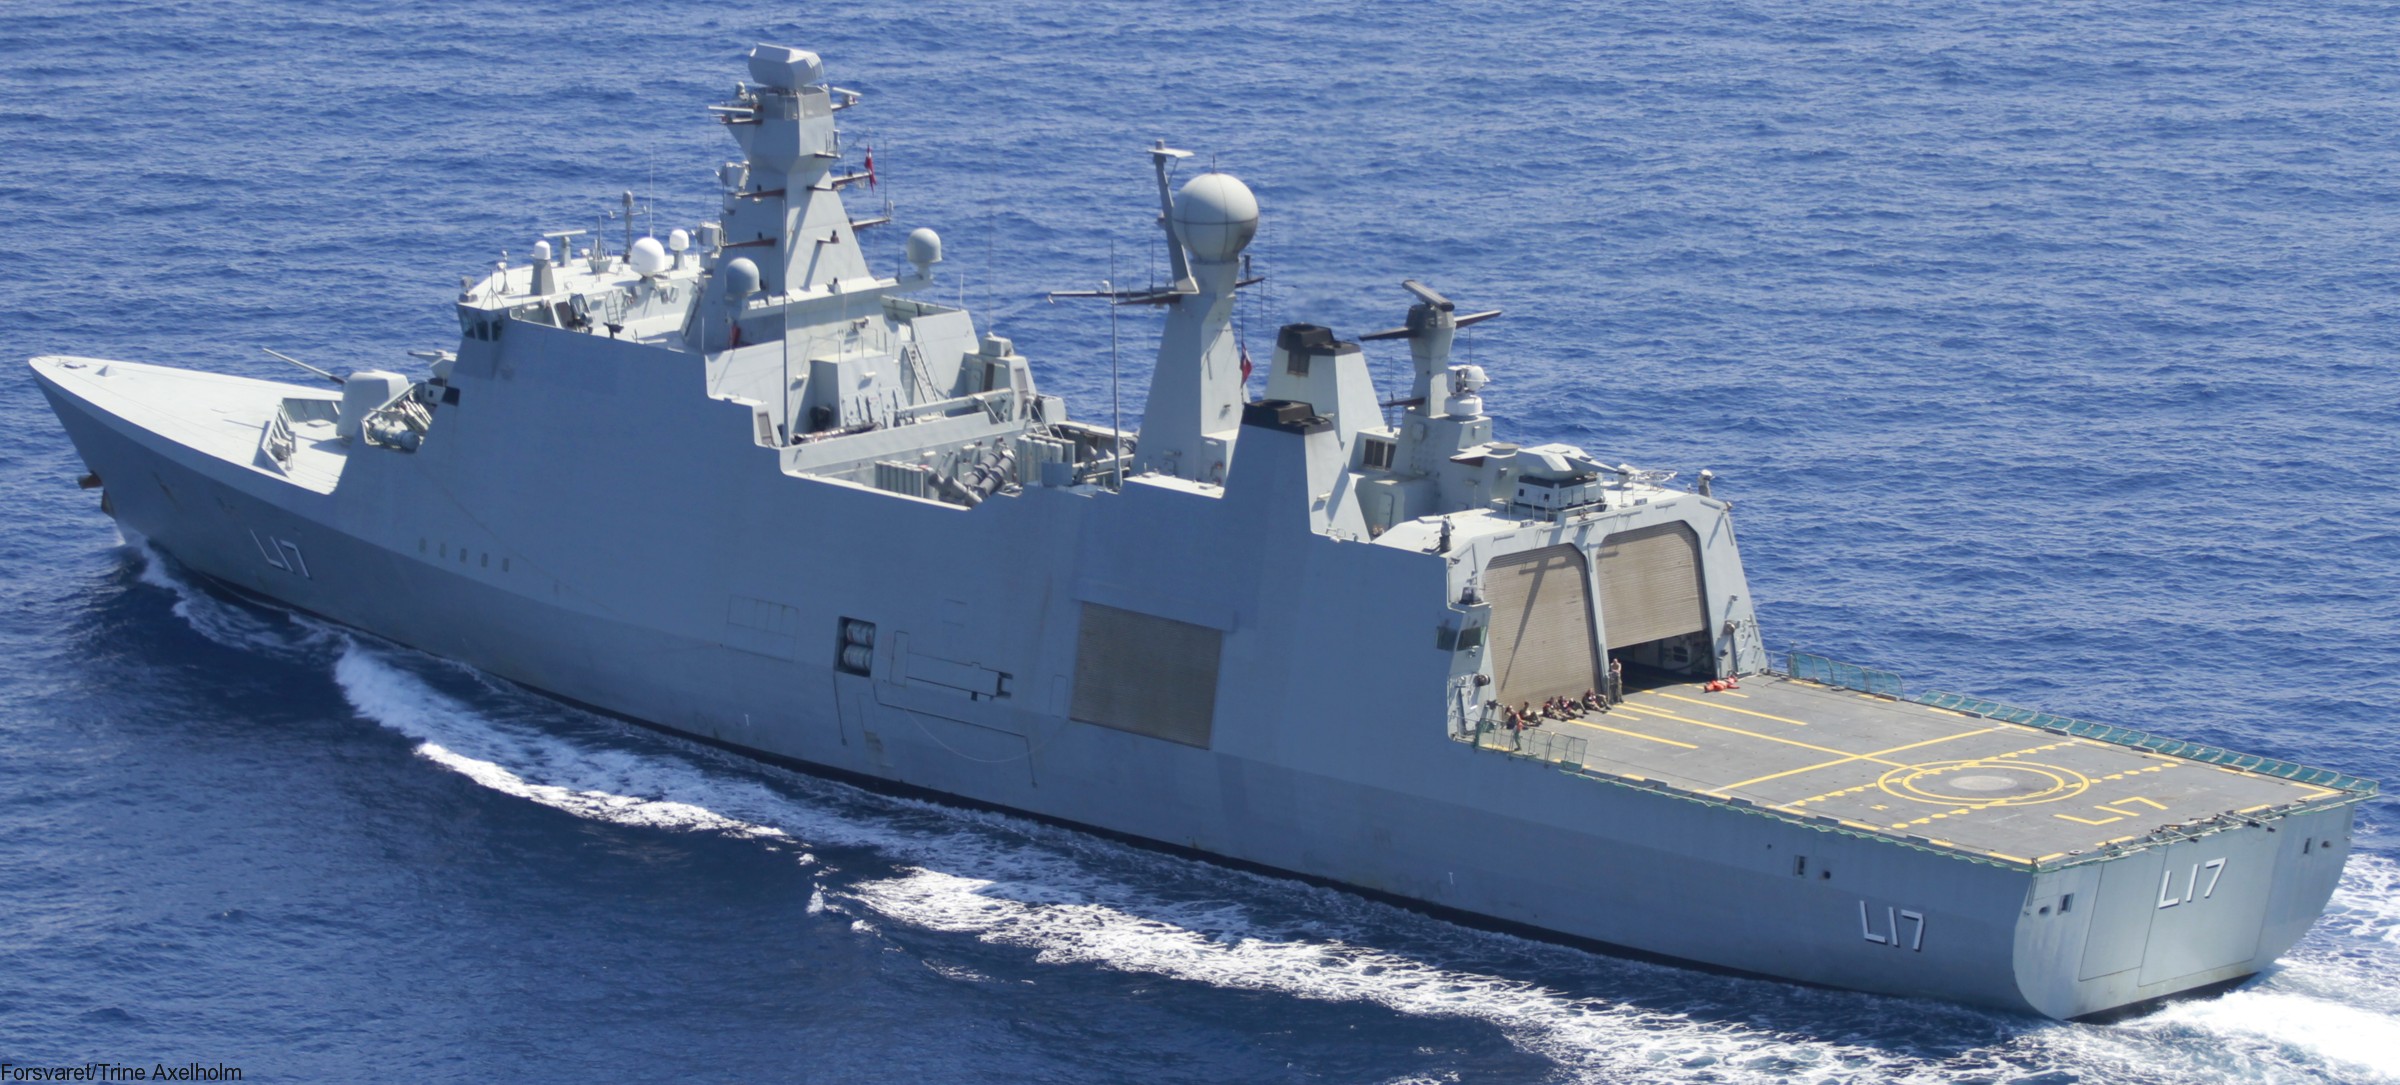 f-342 hdms esbern snare l-17 frigate command support ship royal danish navy 66